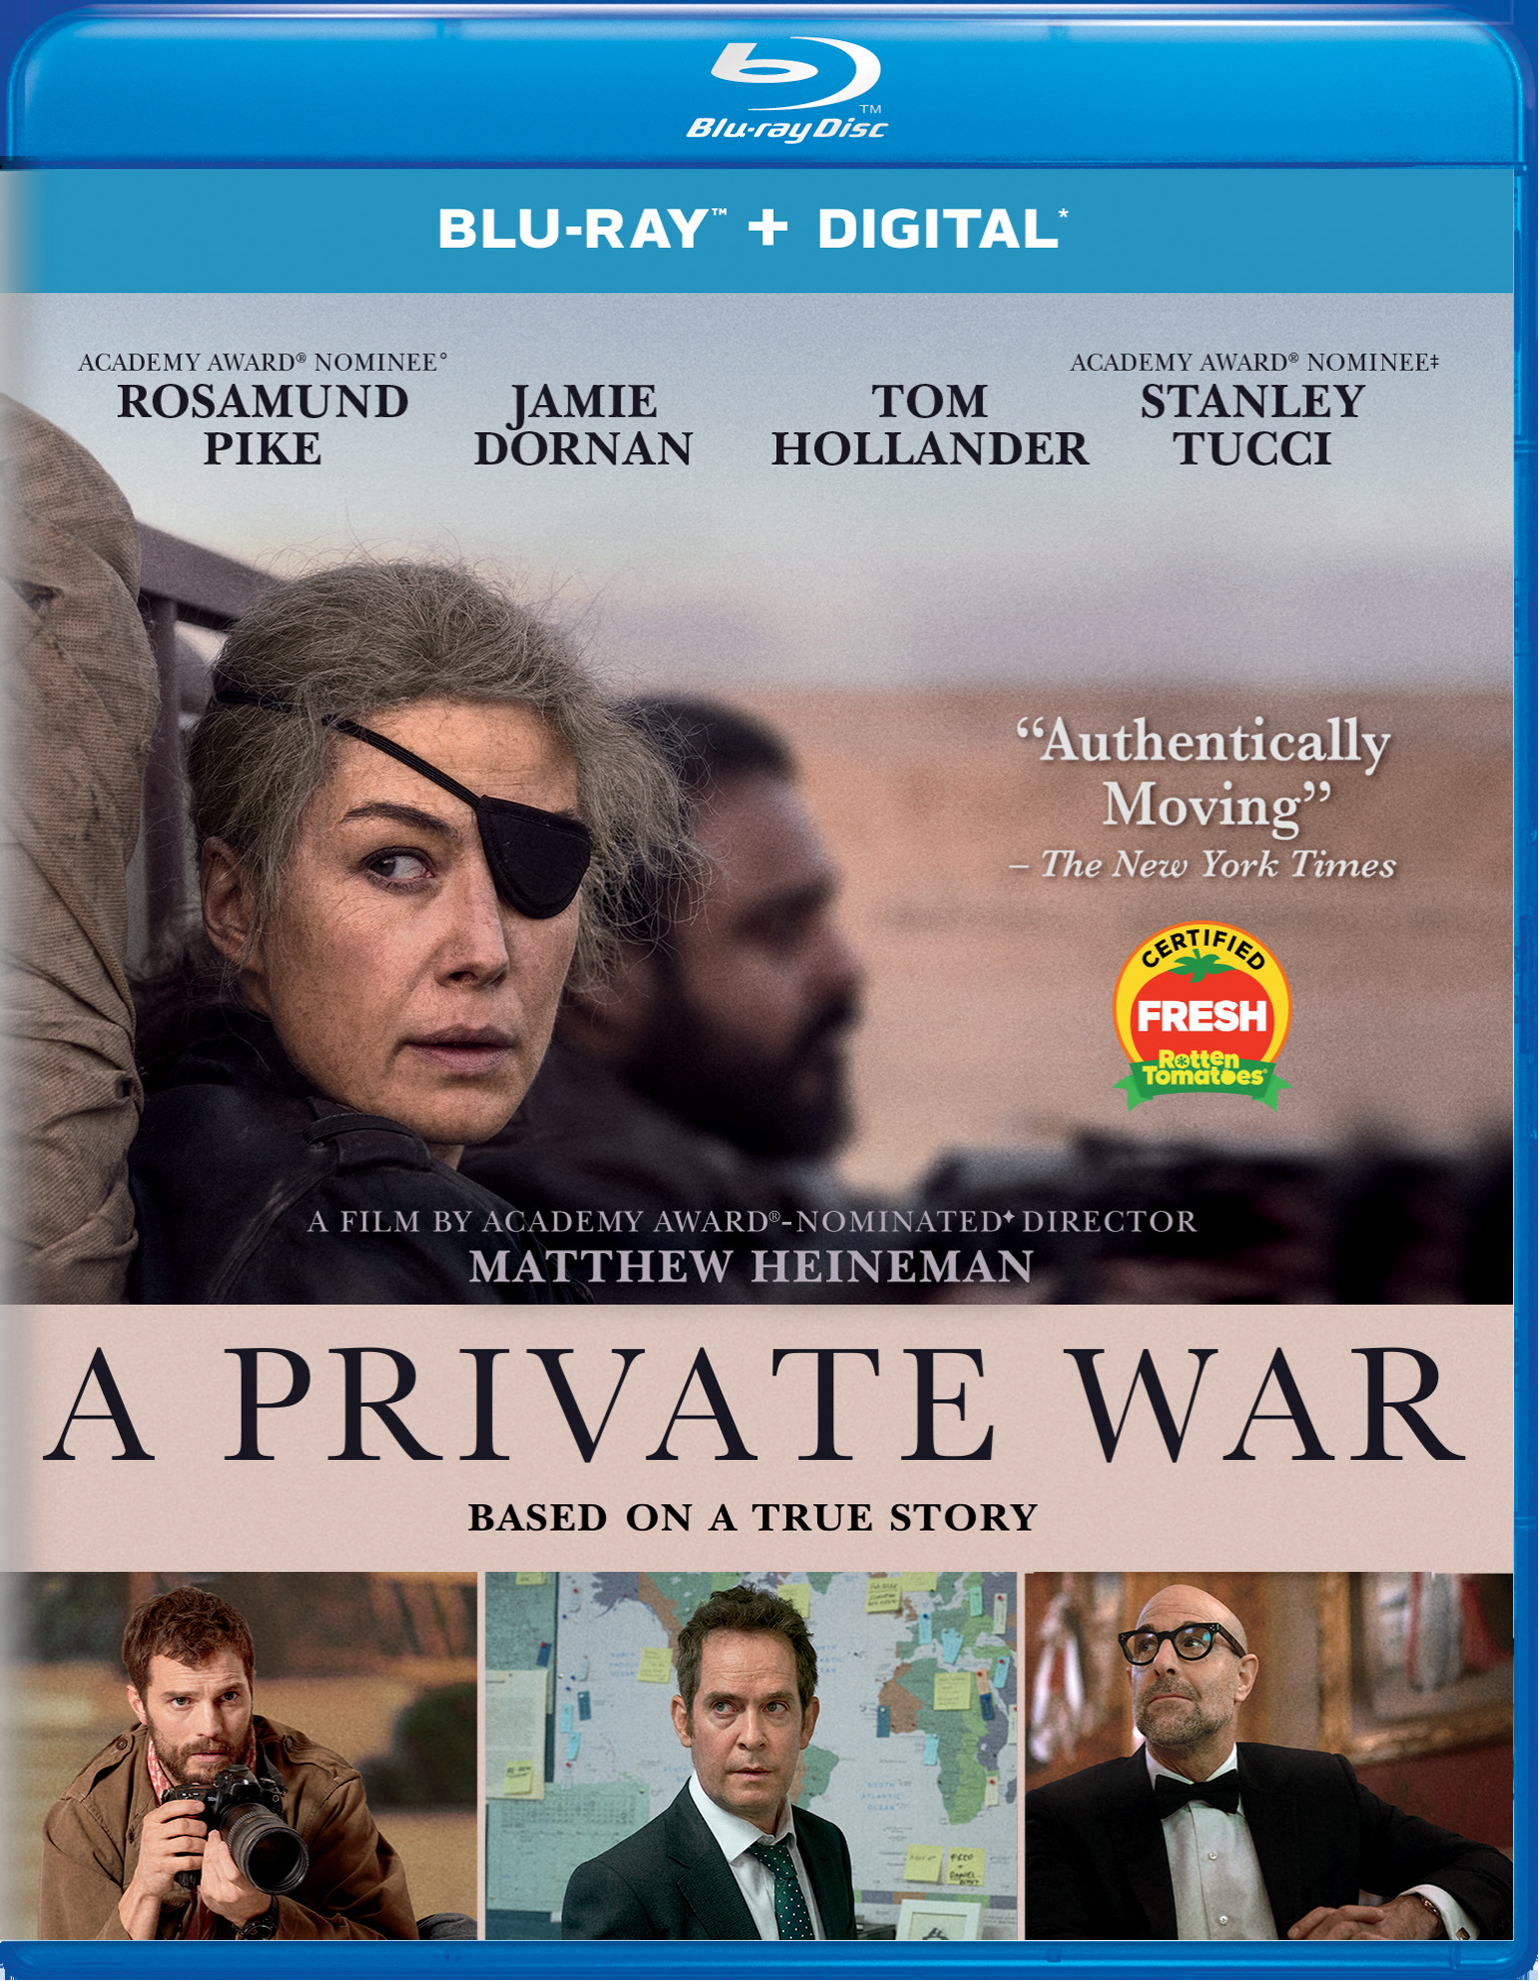 A Private War (Blu-ray + DVD + Digital HD) - Blu-ray [ 2018 ]  - Drama Movies On Blu-ray - Movies On GRUV